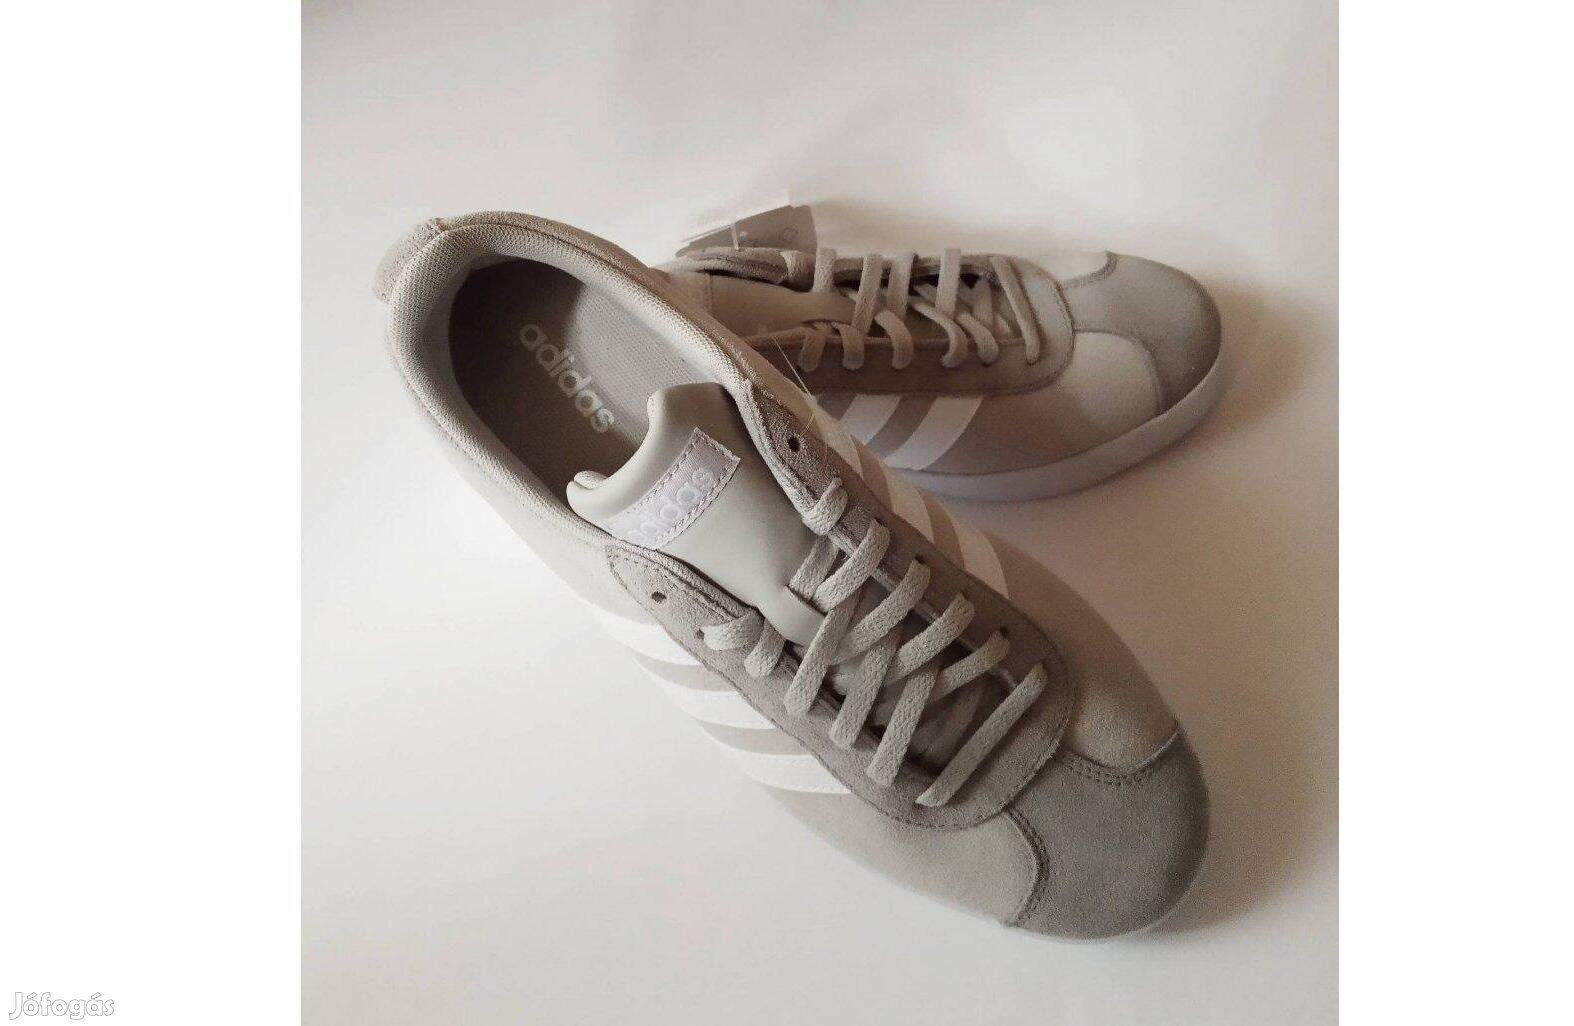 Adidas VL Court 2.0 velúr bőr sportcipő, szürke,fehér csíkokkal.Új